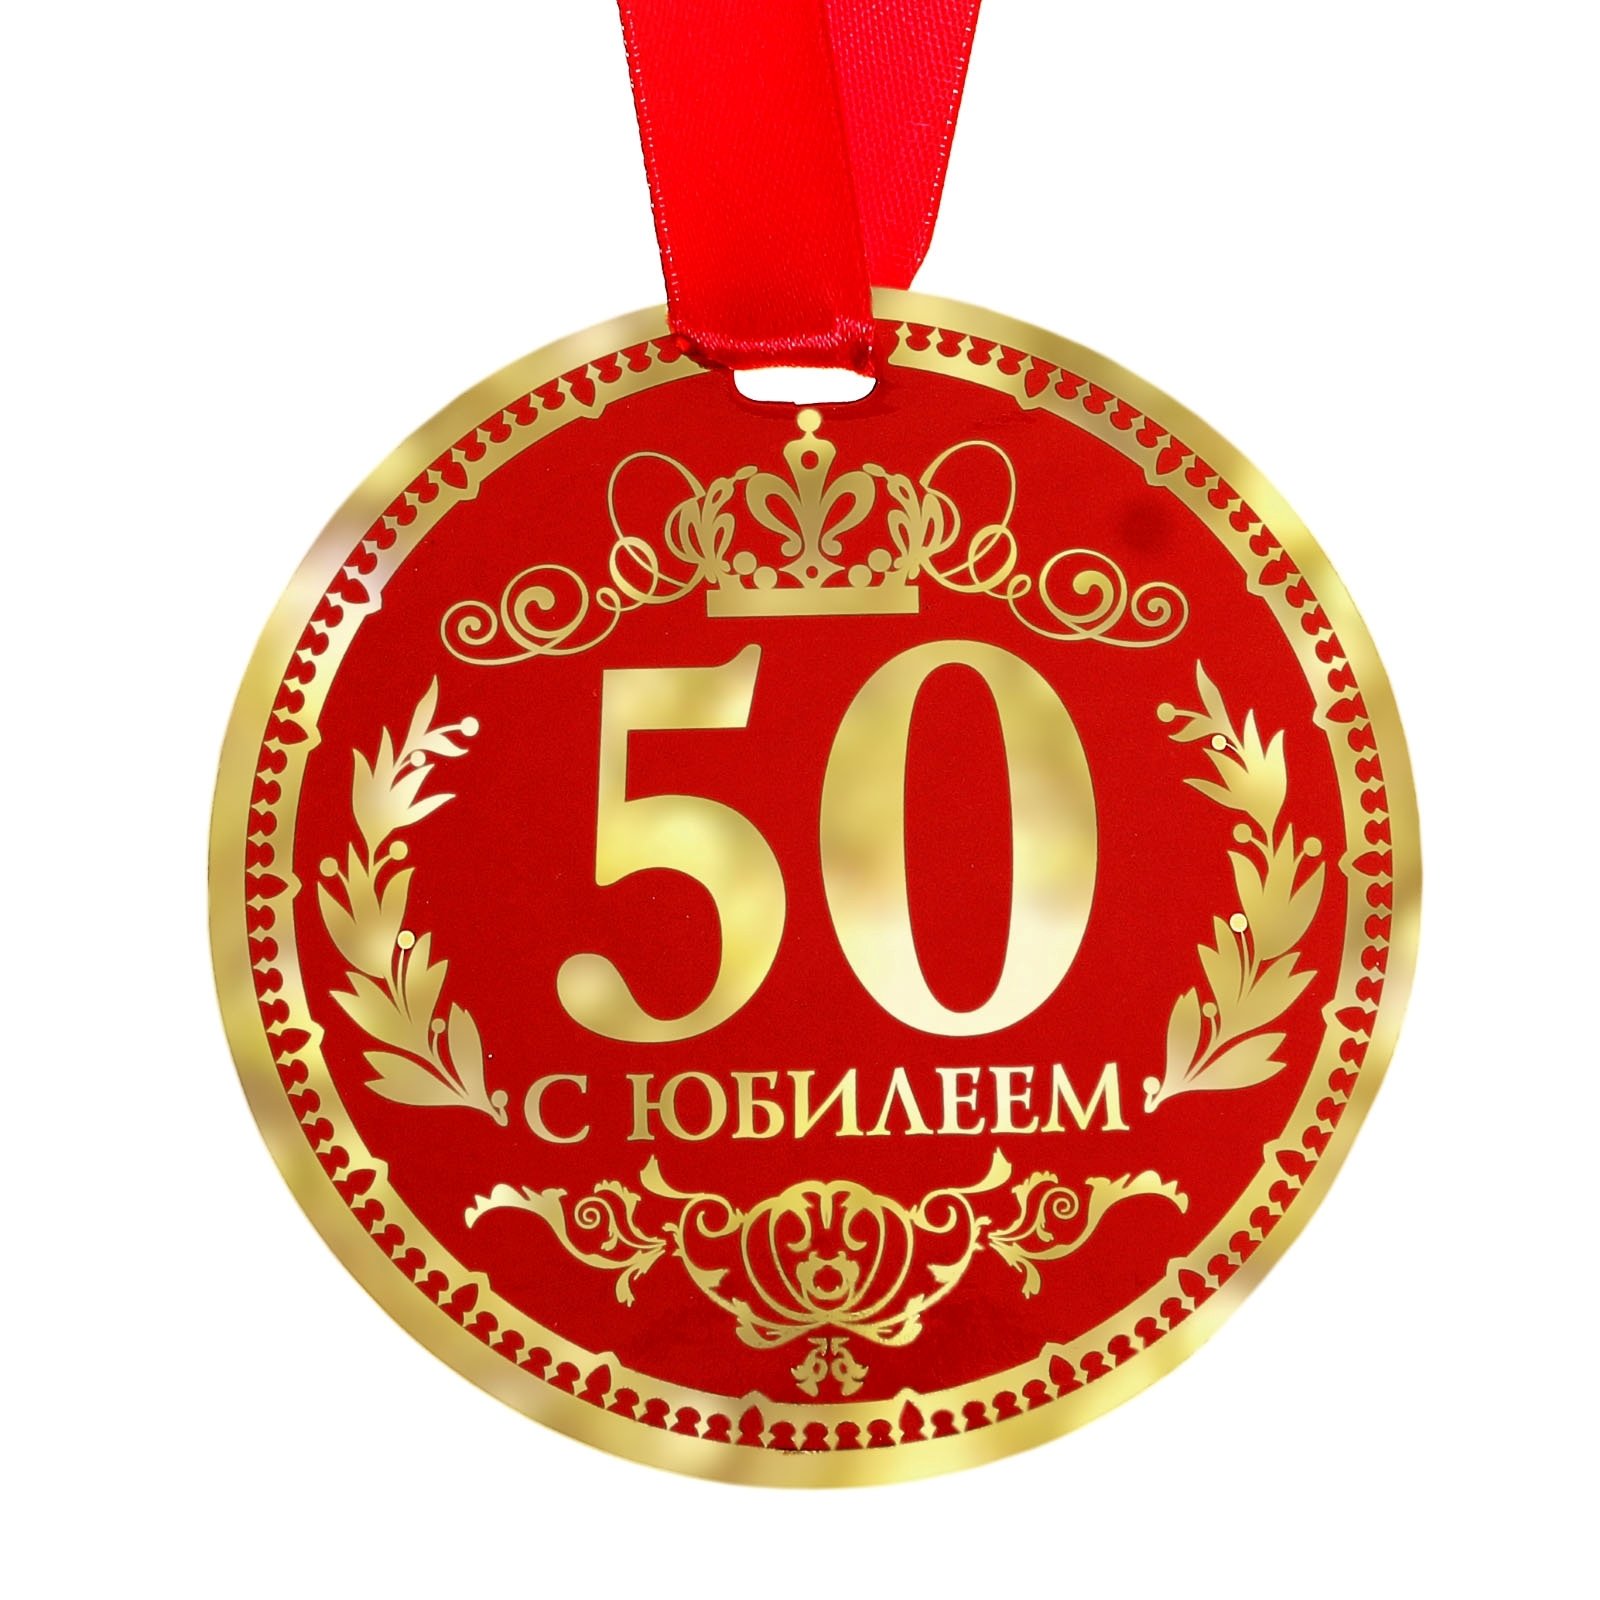 50 лет 20 б. Медаль 50 лет. Медаль с юбилеем. Медаль на 50 лет женщине. Медаль юбиляру 50 лет.